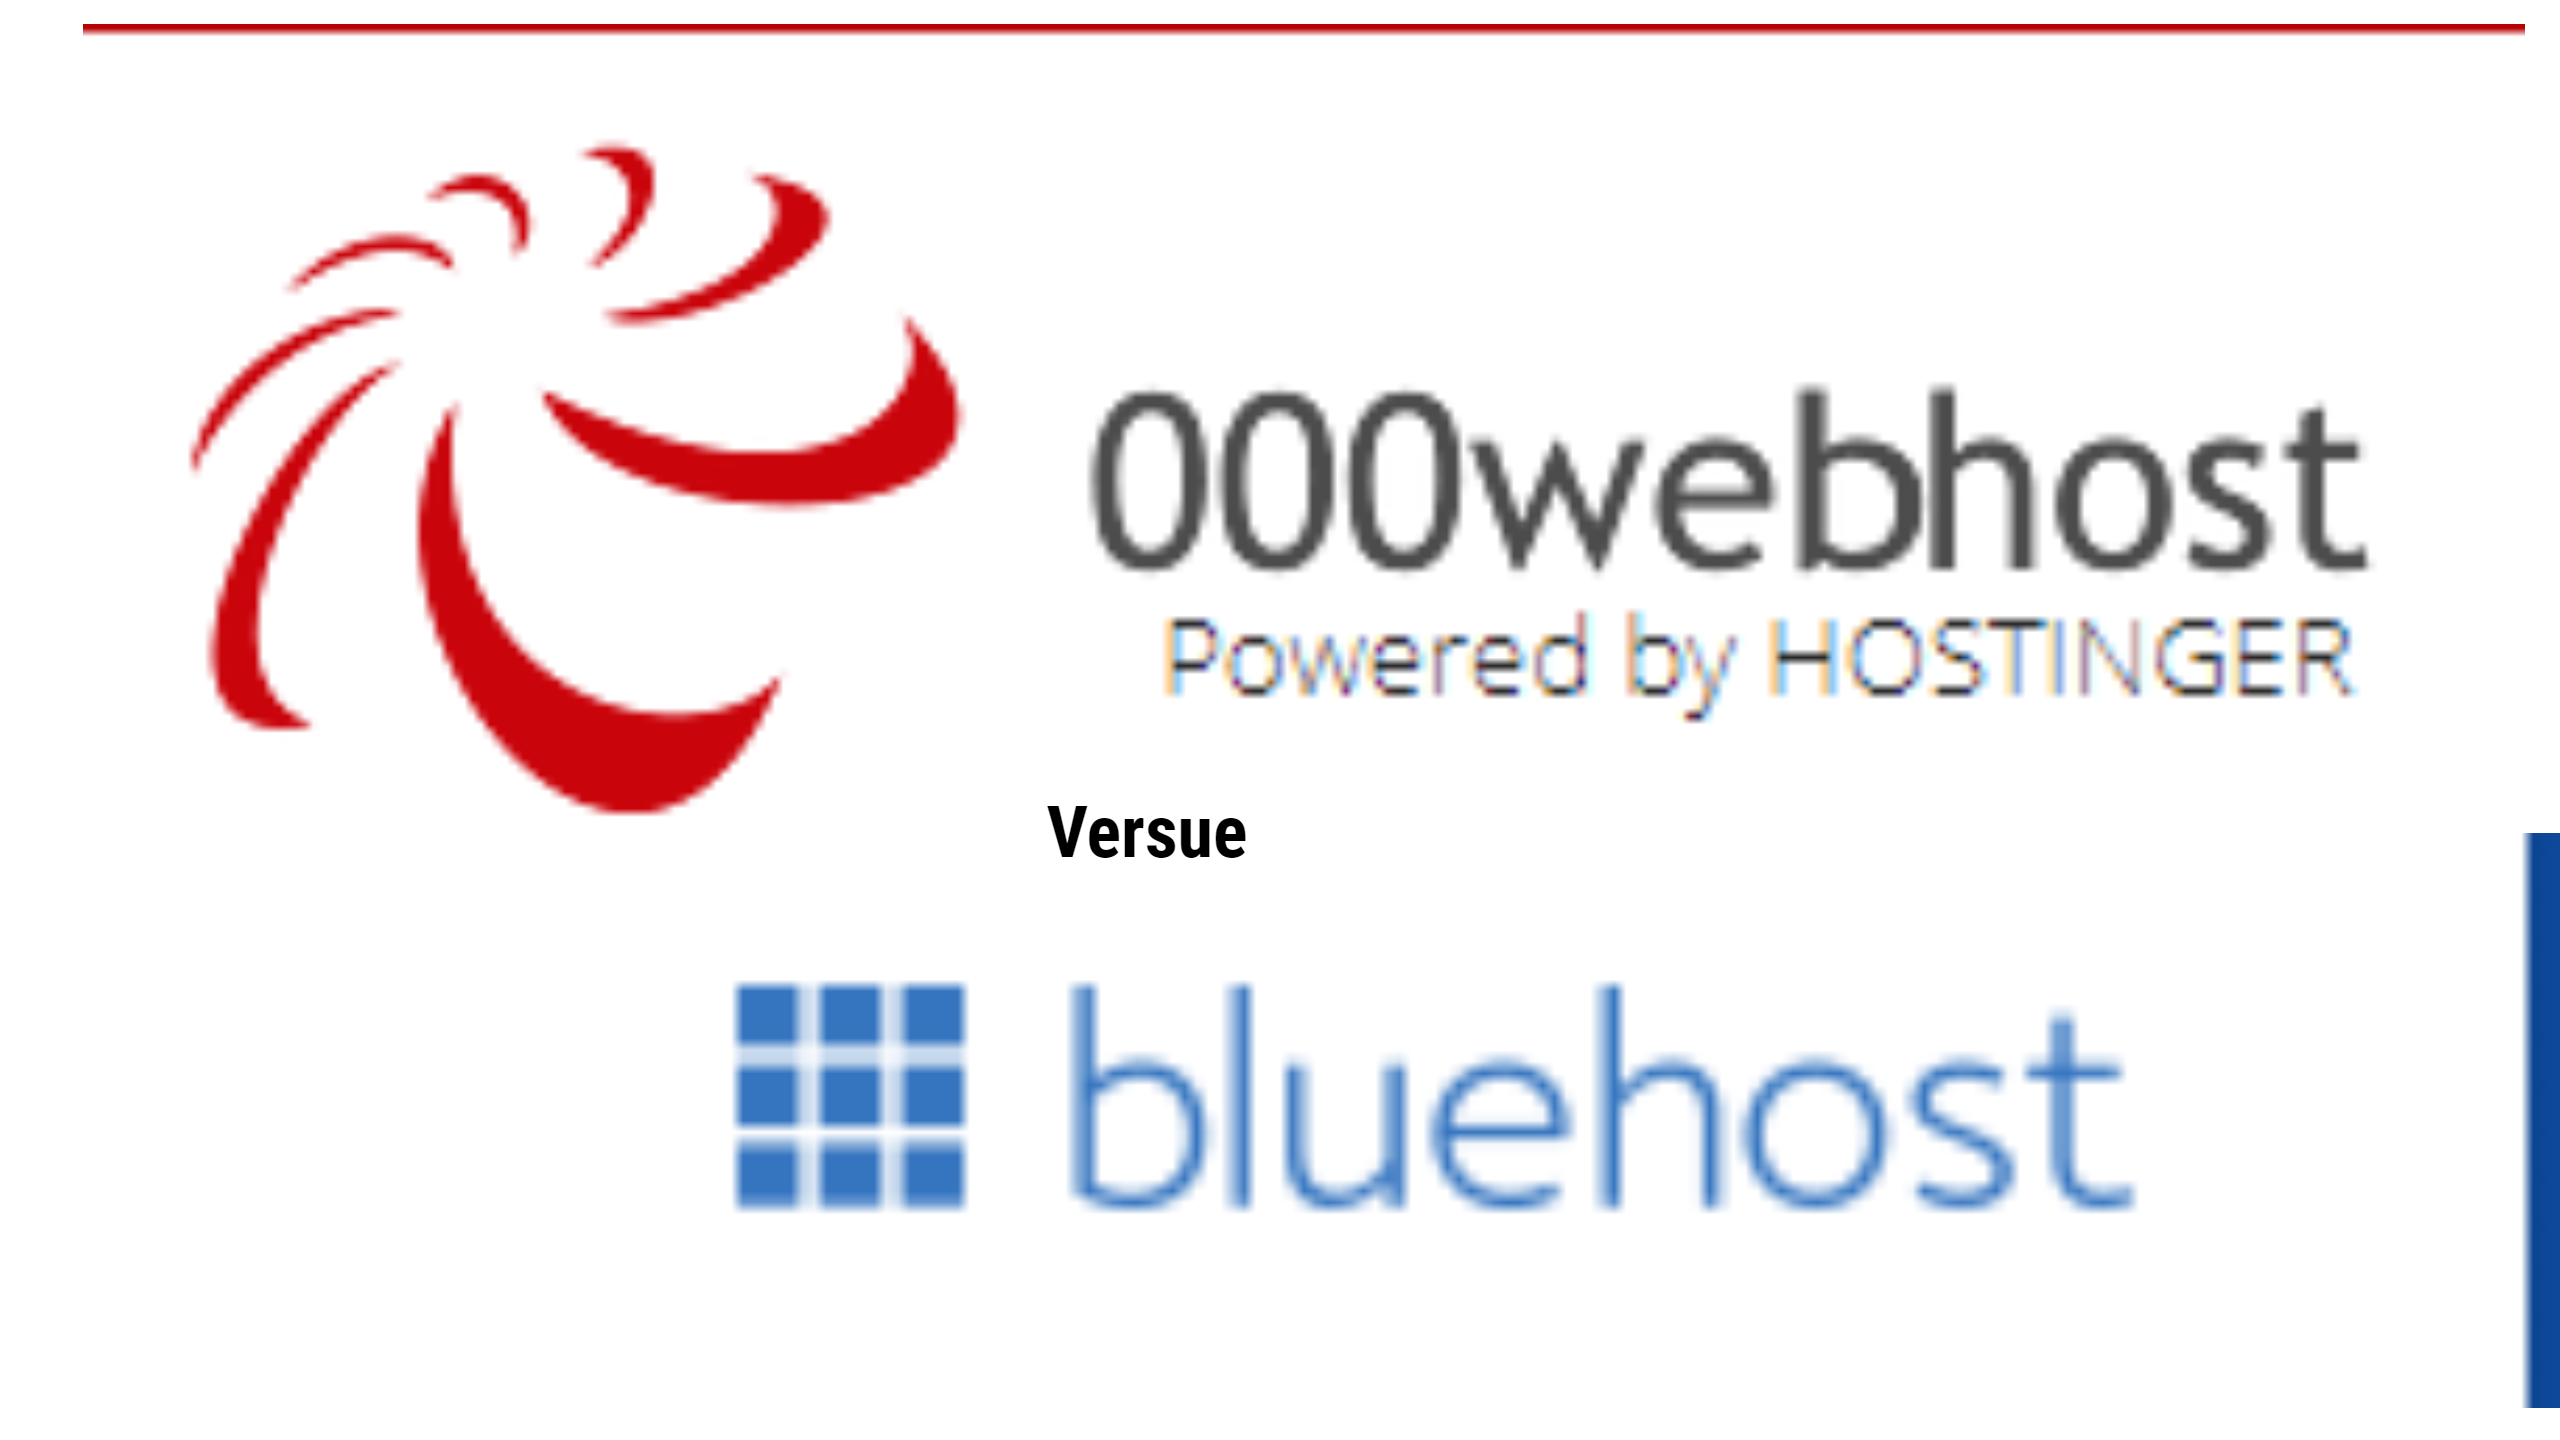 000webhost vs bluehost web hosting